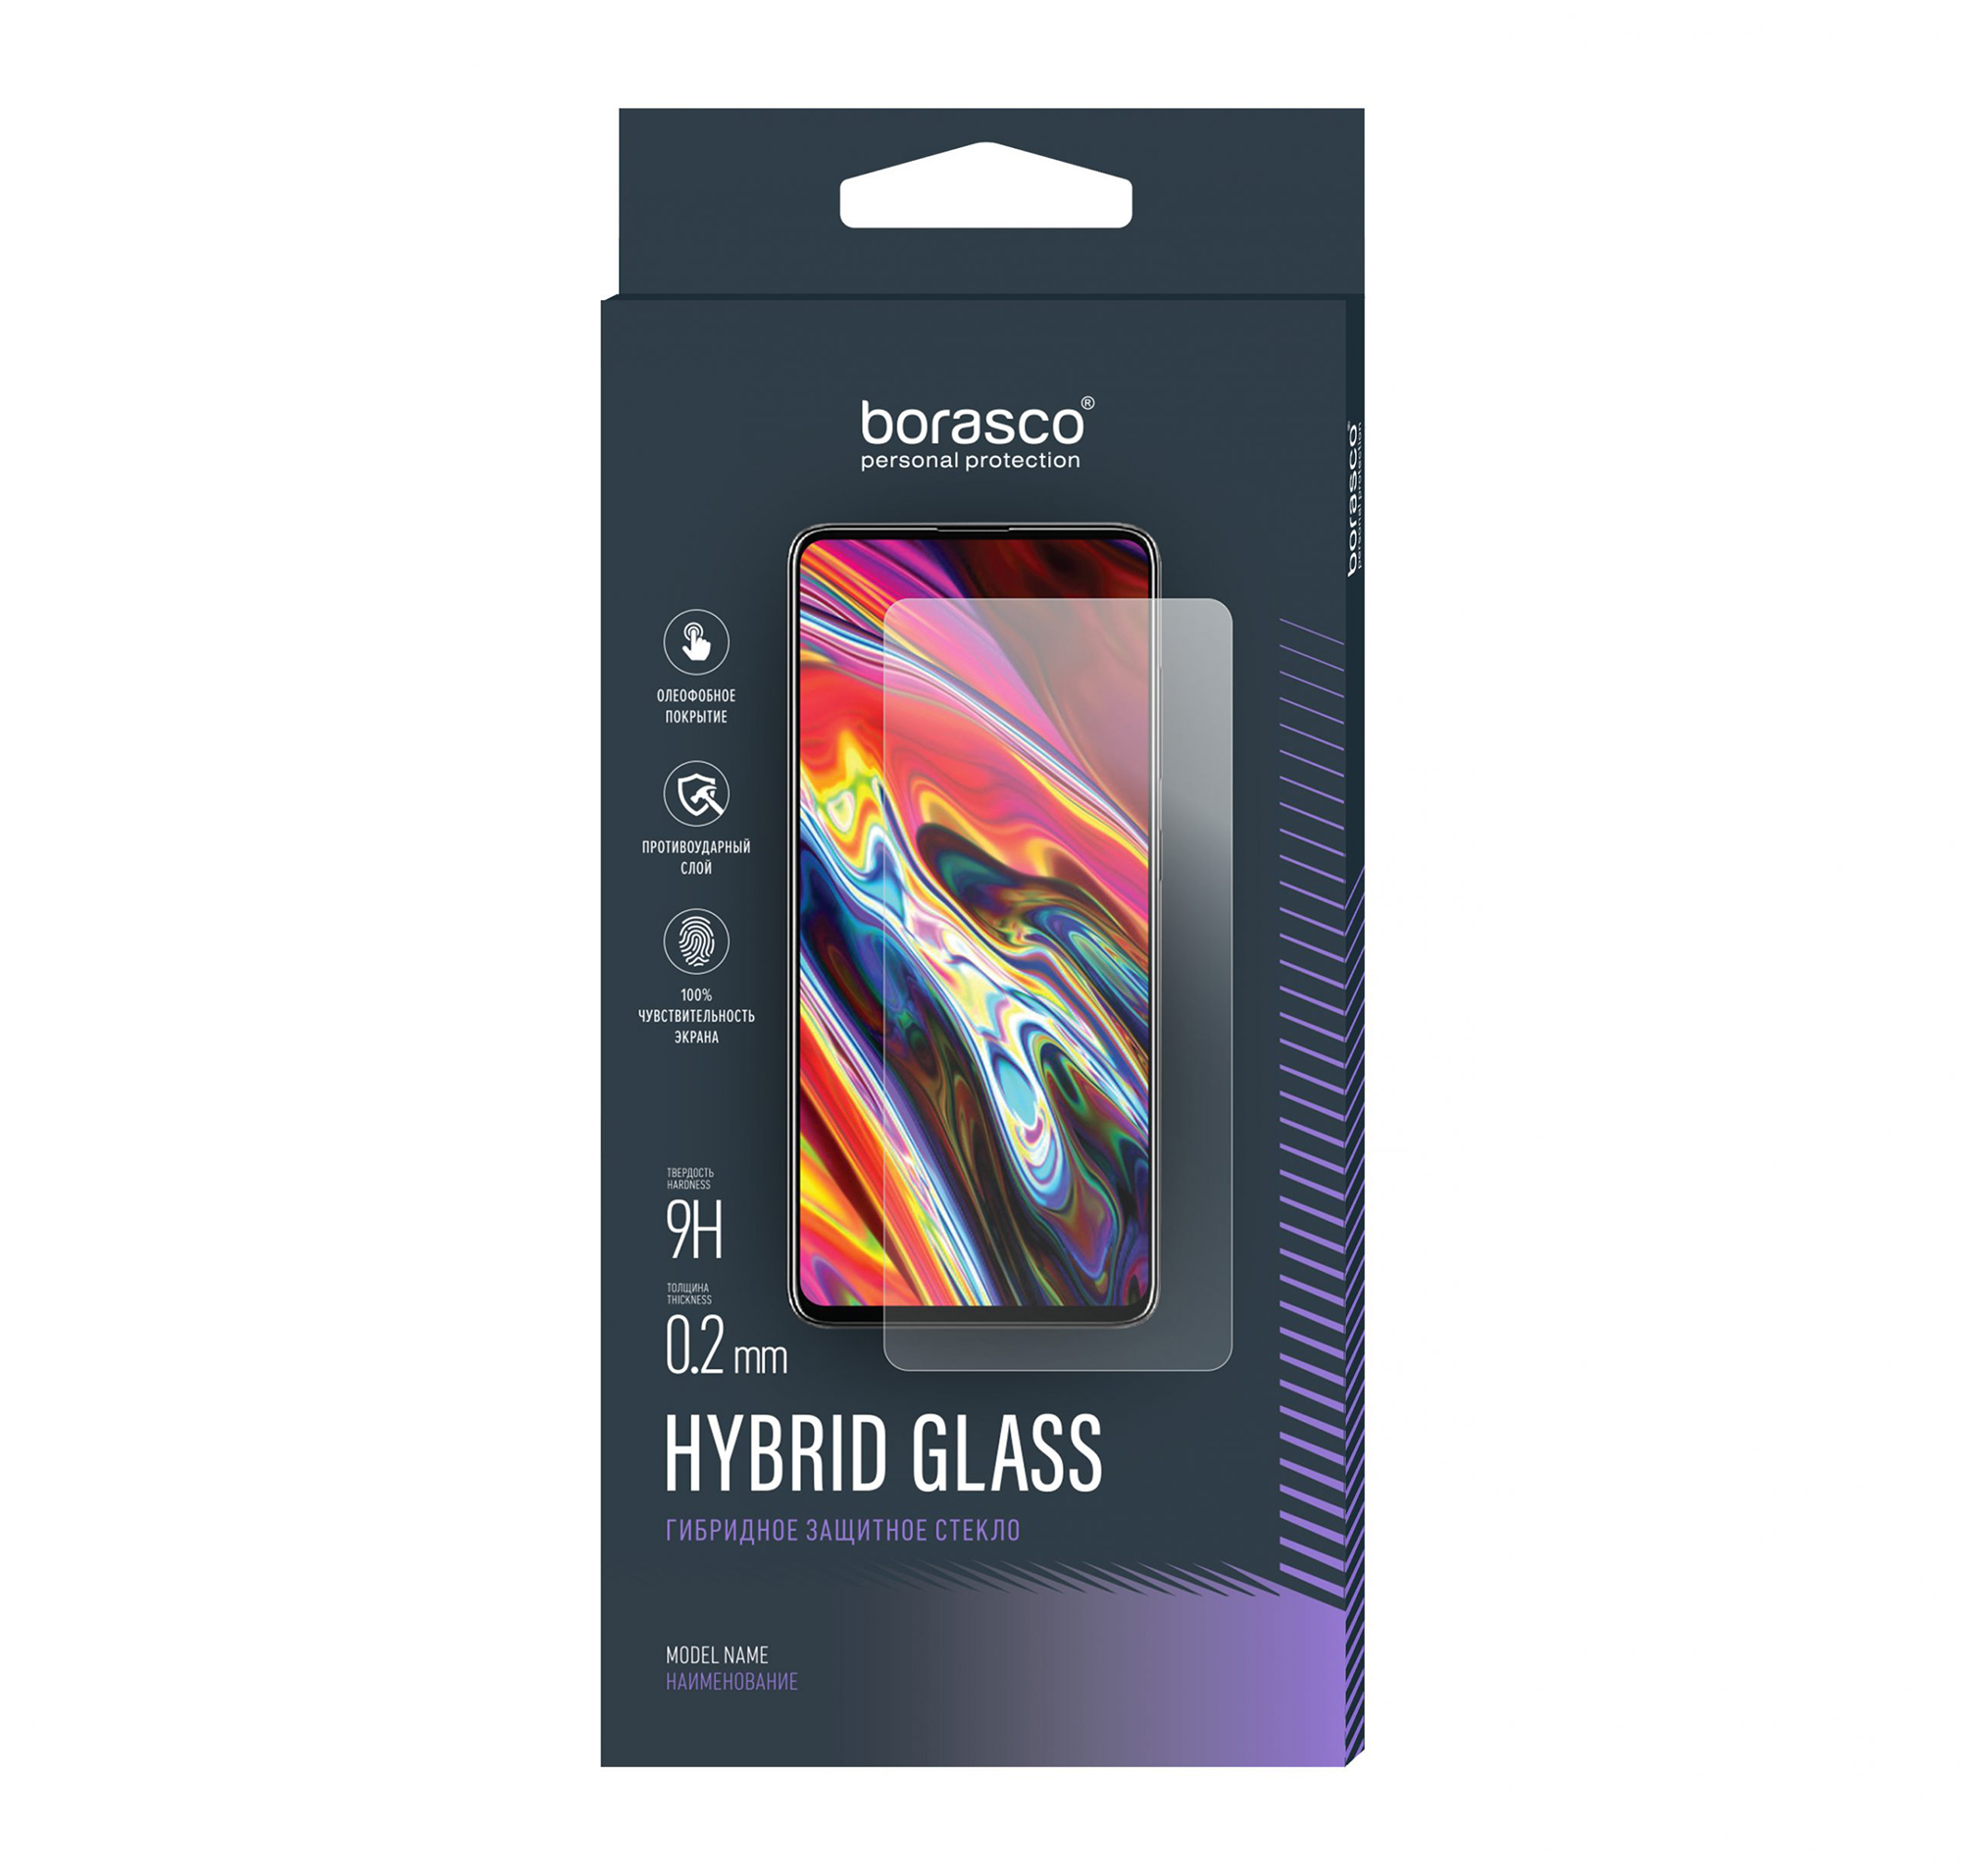 Защитное стекло Hybrid Glass для Apple iPad Air (2020) защитное стекло 2 5d для ipad pro 12 9 2018 2020 ibest